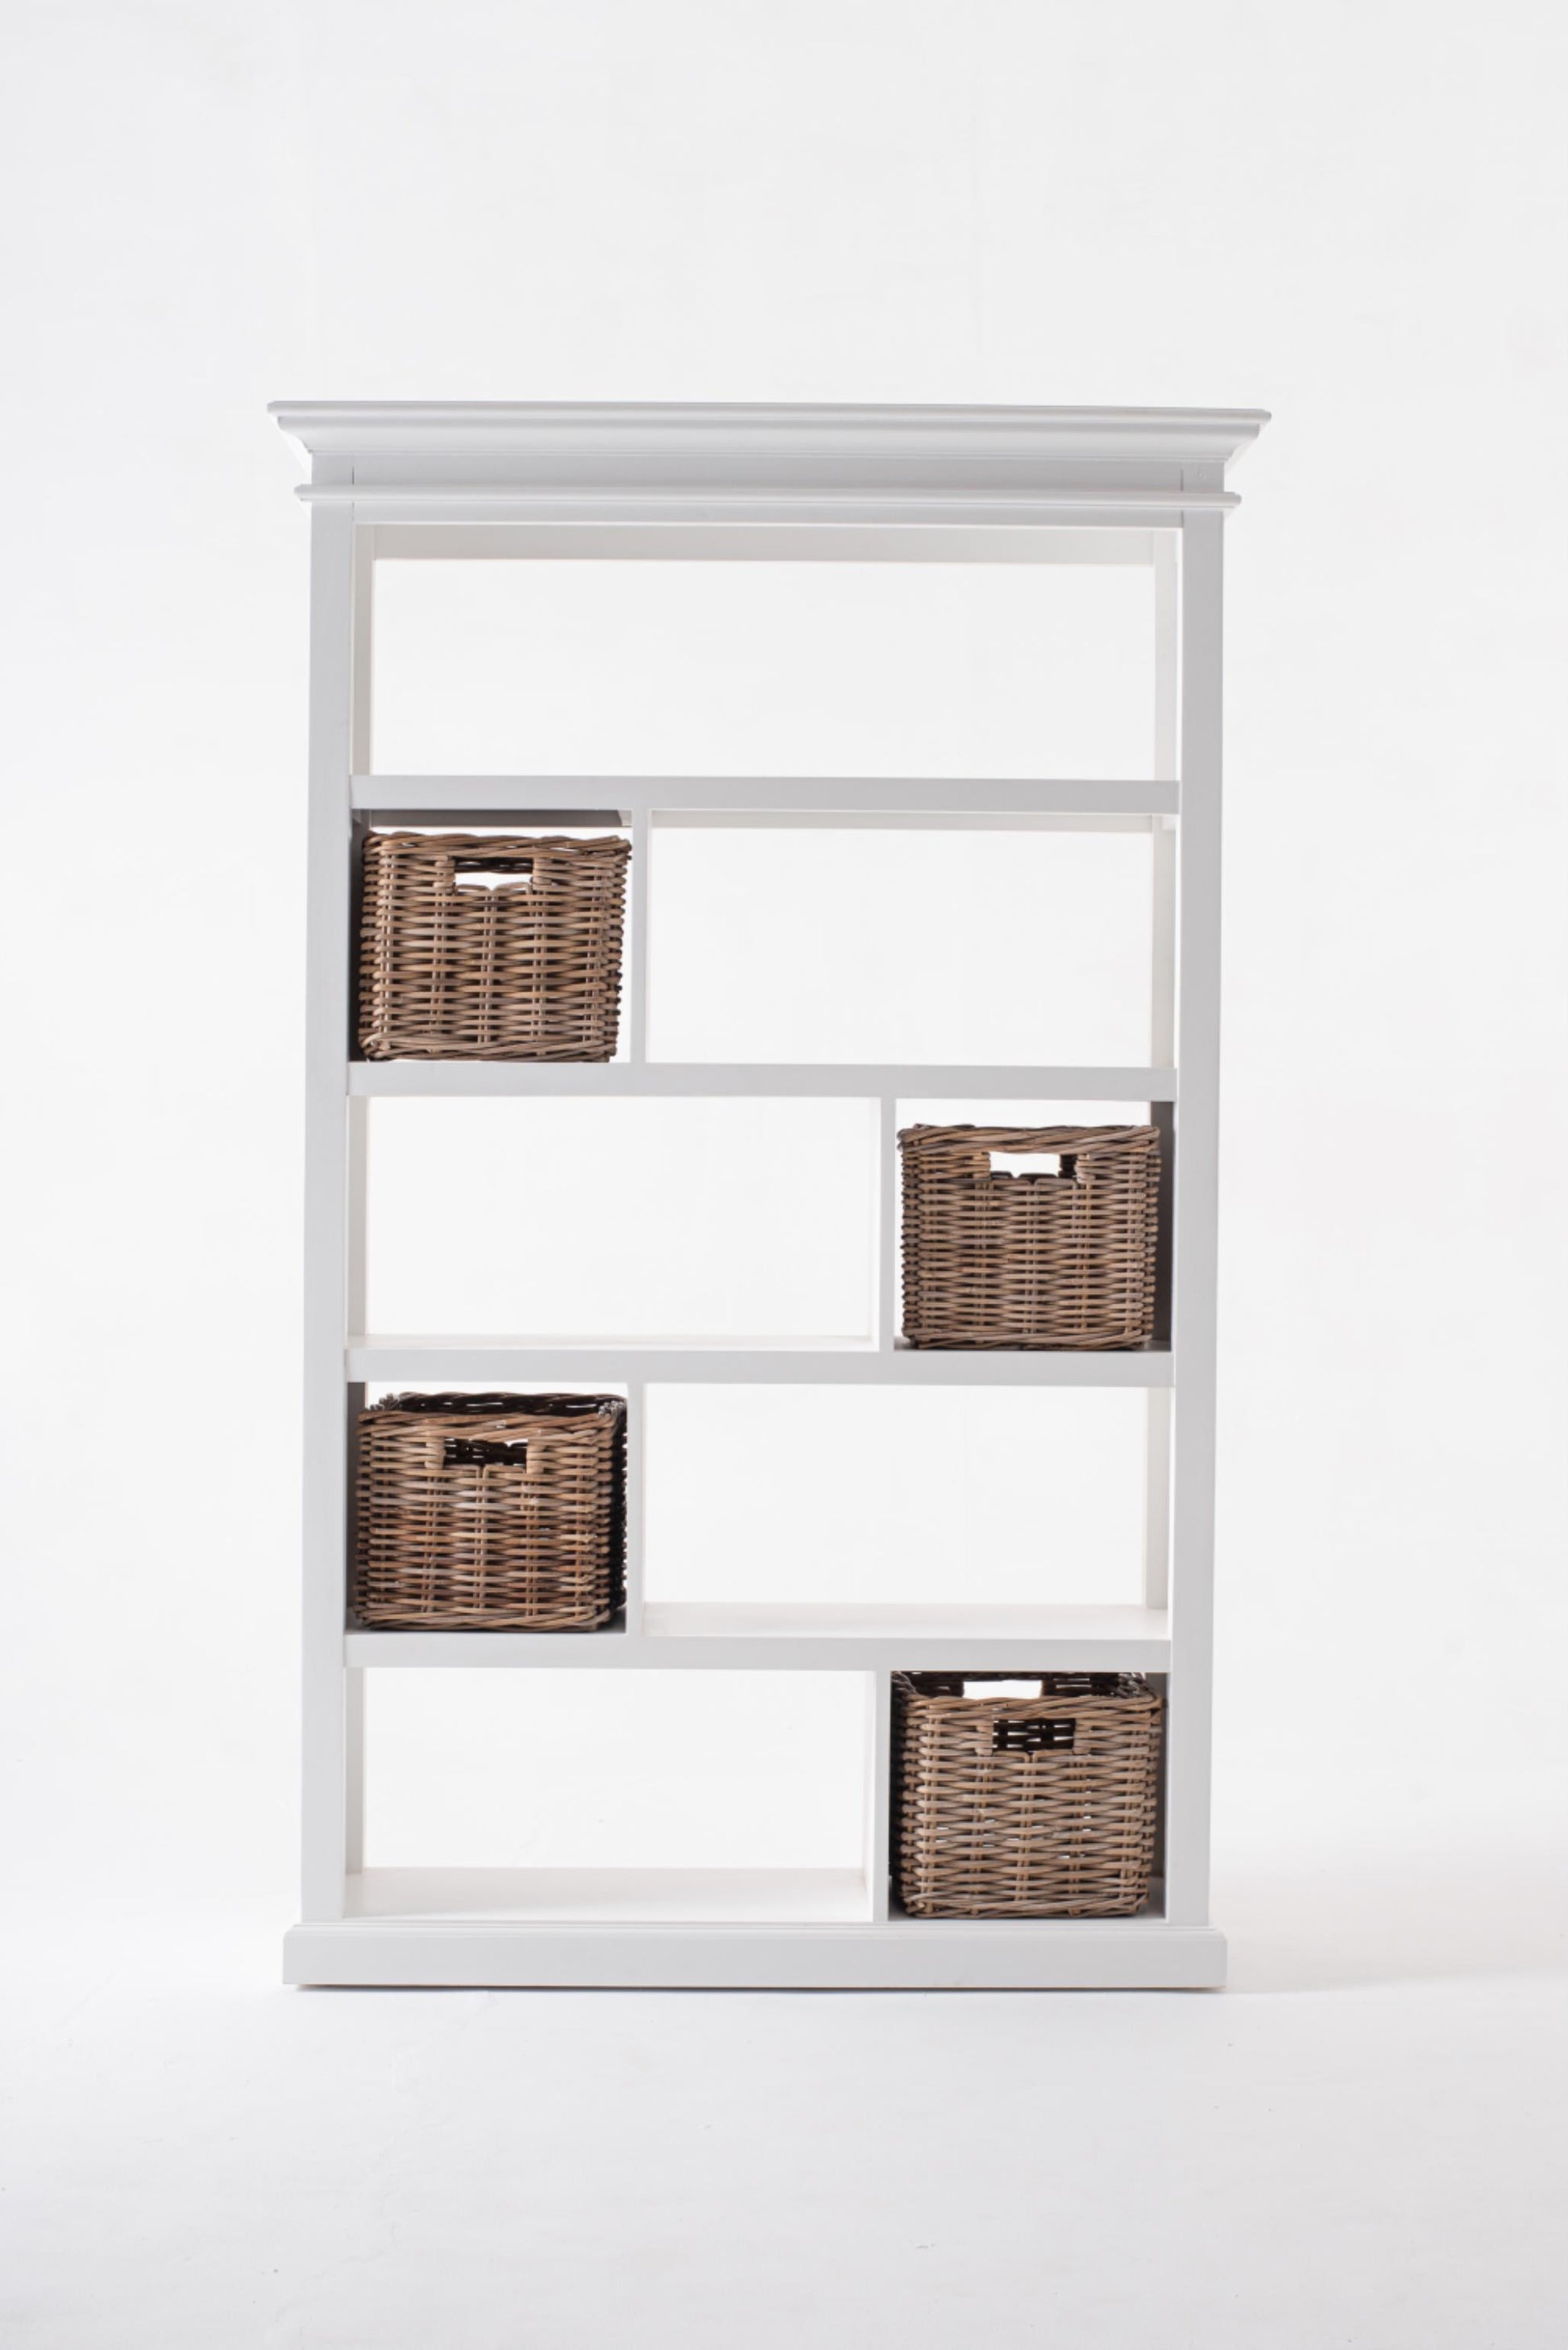 Halifax collection by Nova Solo.  Room Divider with Basket Set CasaFenix